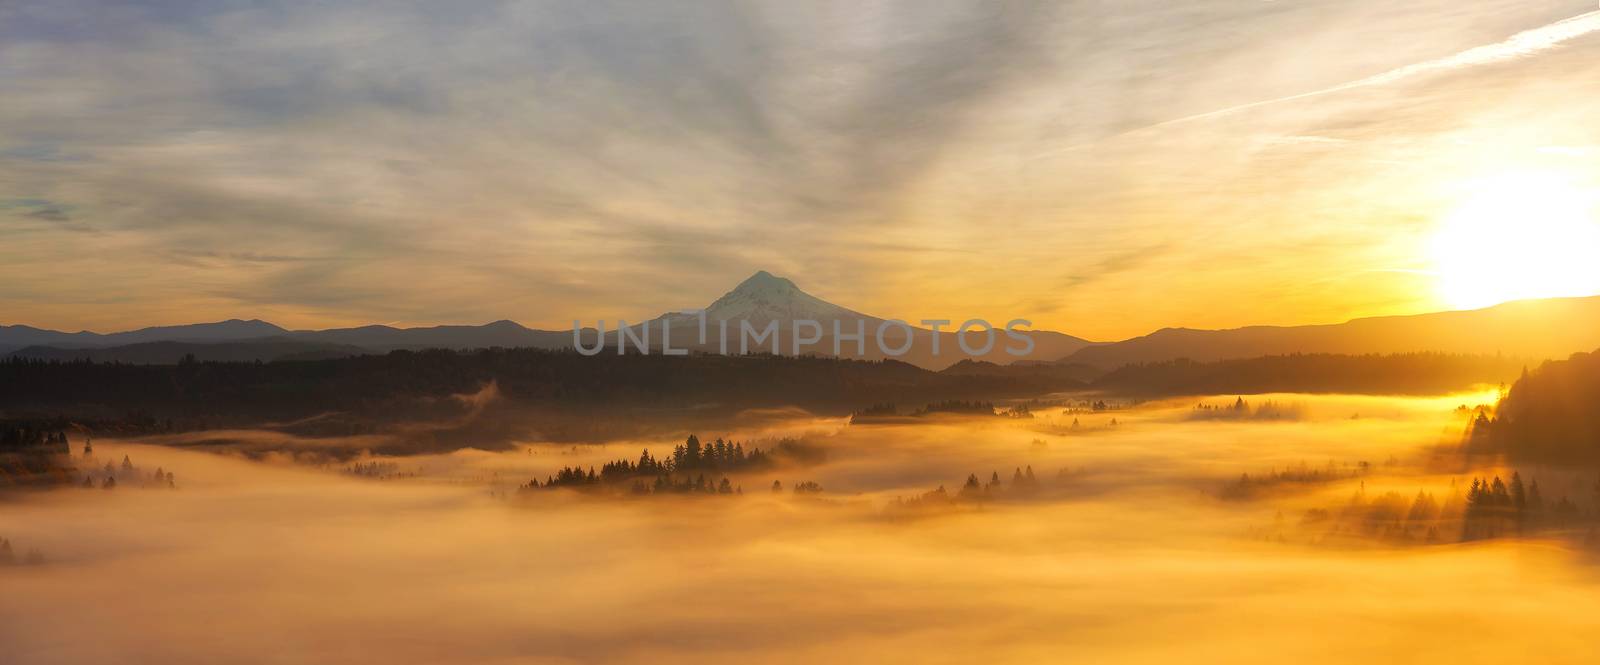 Sunrise Over Mt Hood Panorama by jpldesigns